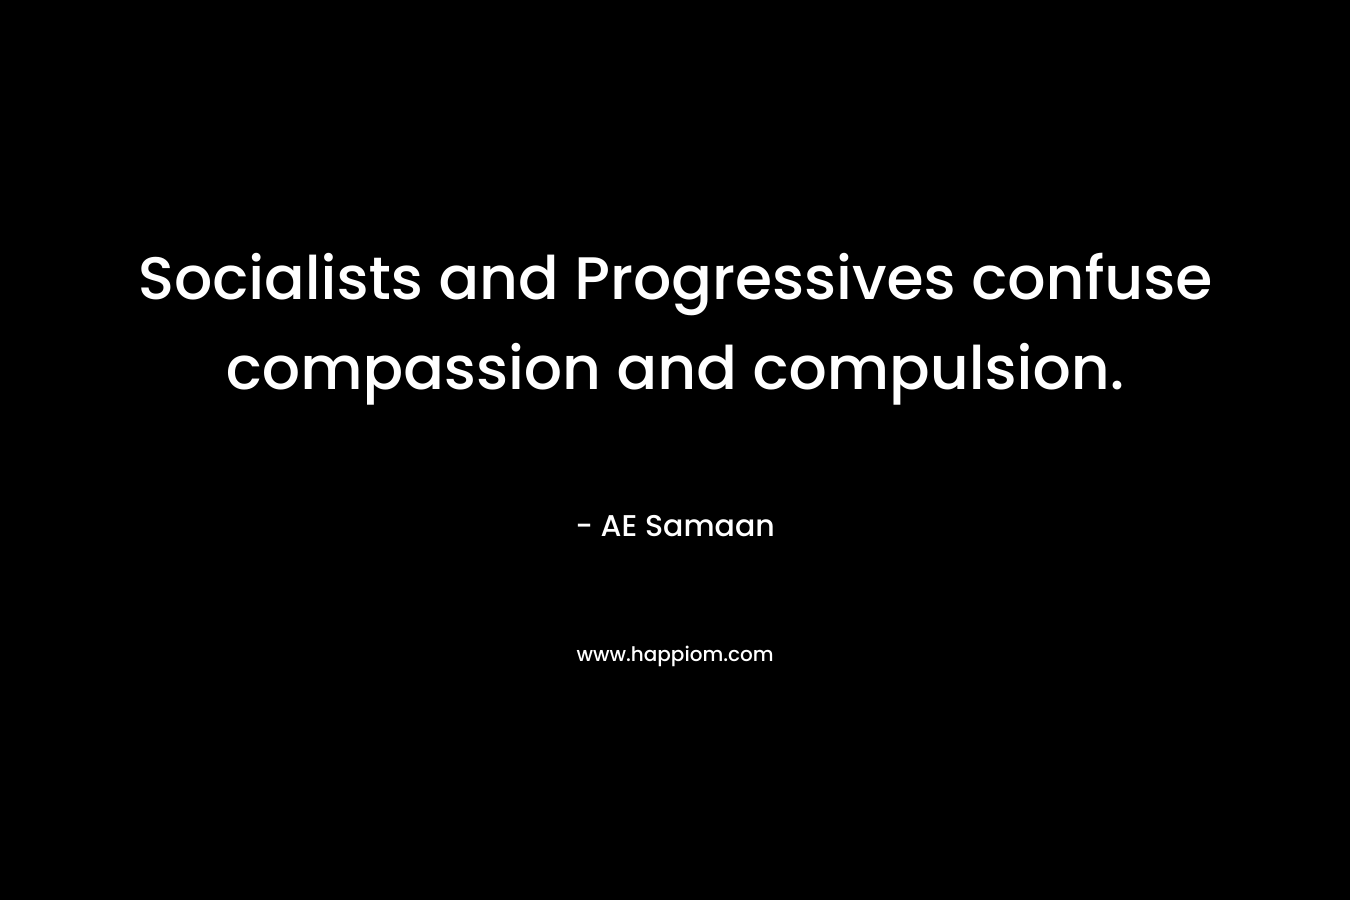 Socialists and Progressives confuse compassion and compulsion.